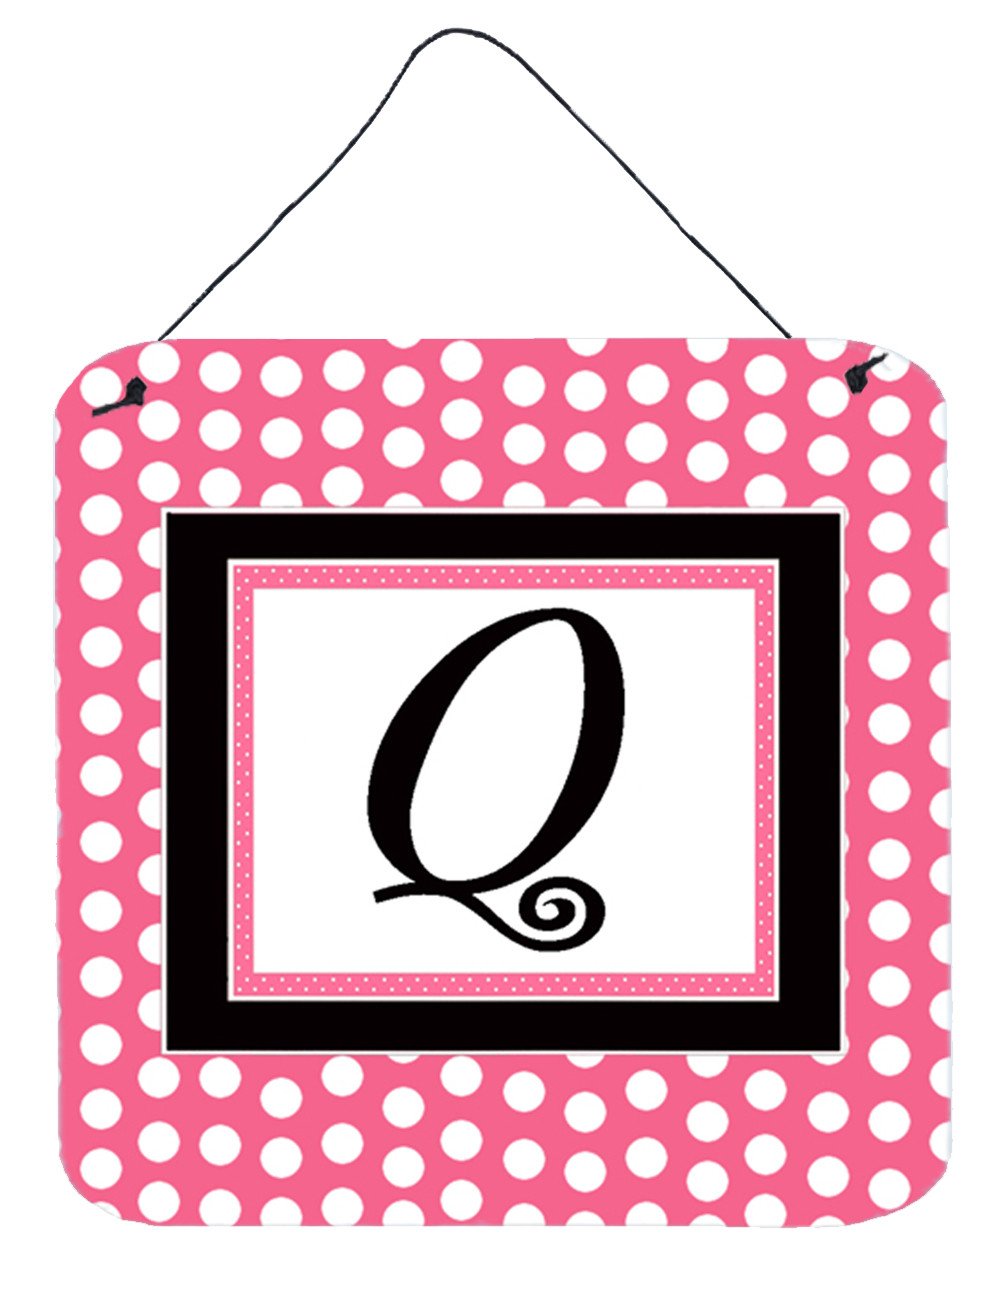 Letter Q Initial  - Pink Black Polka Dots Wall or Door Hanging Prints by Caroline's Treasures